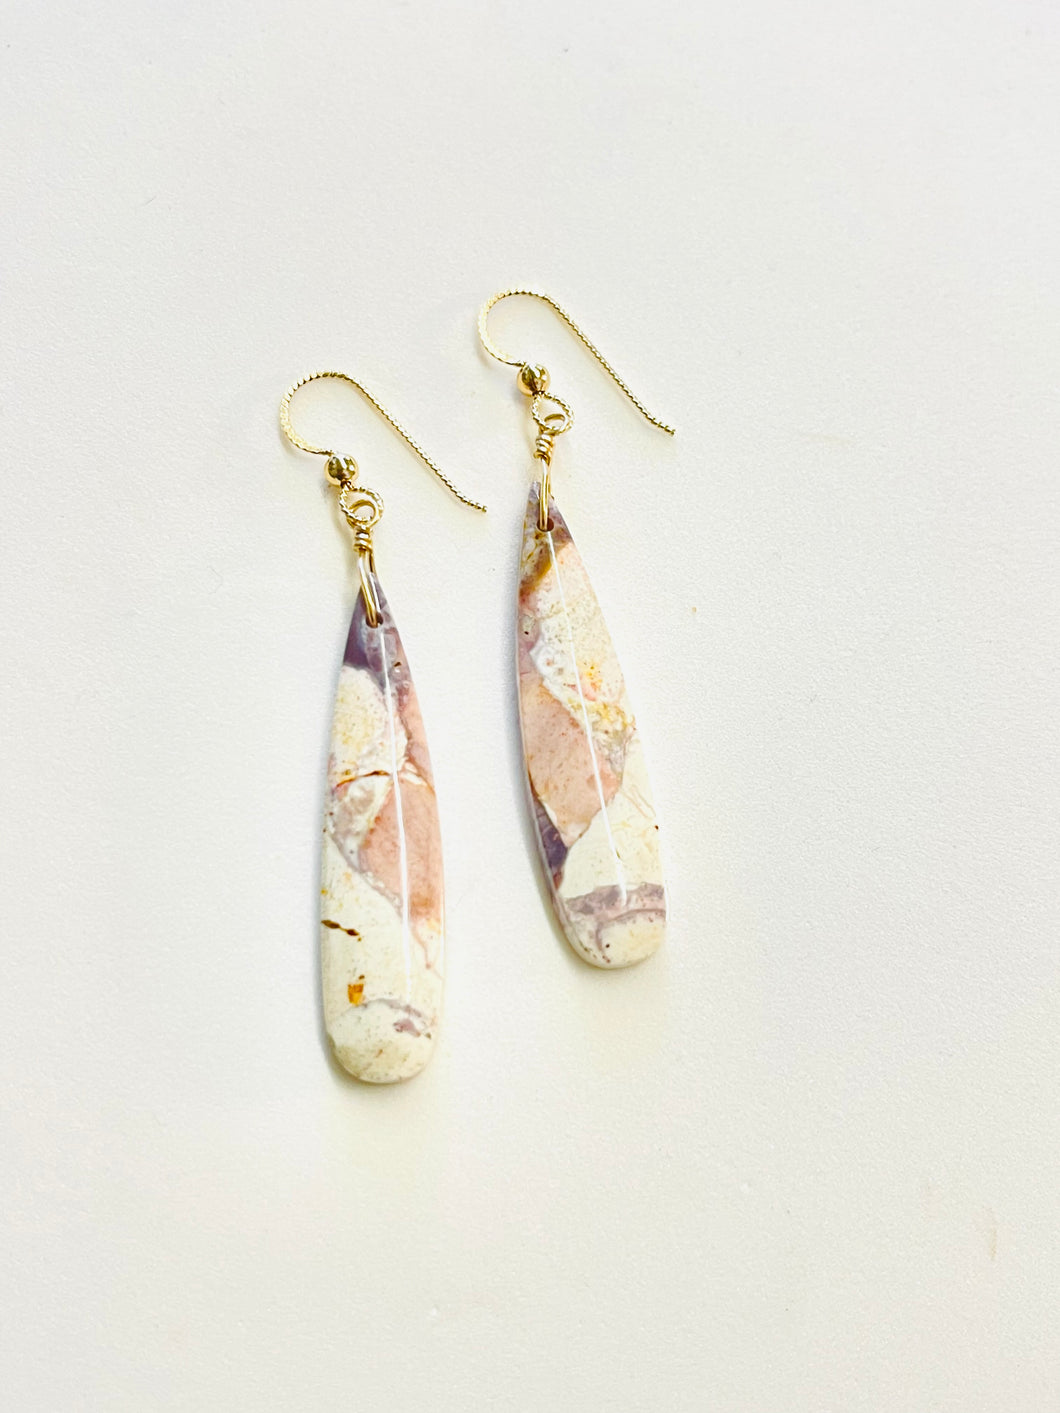 Earrings with ocean jasper, light colors